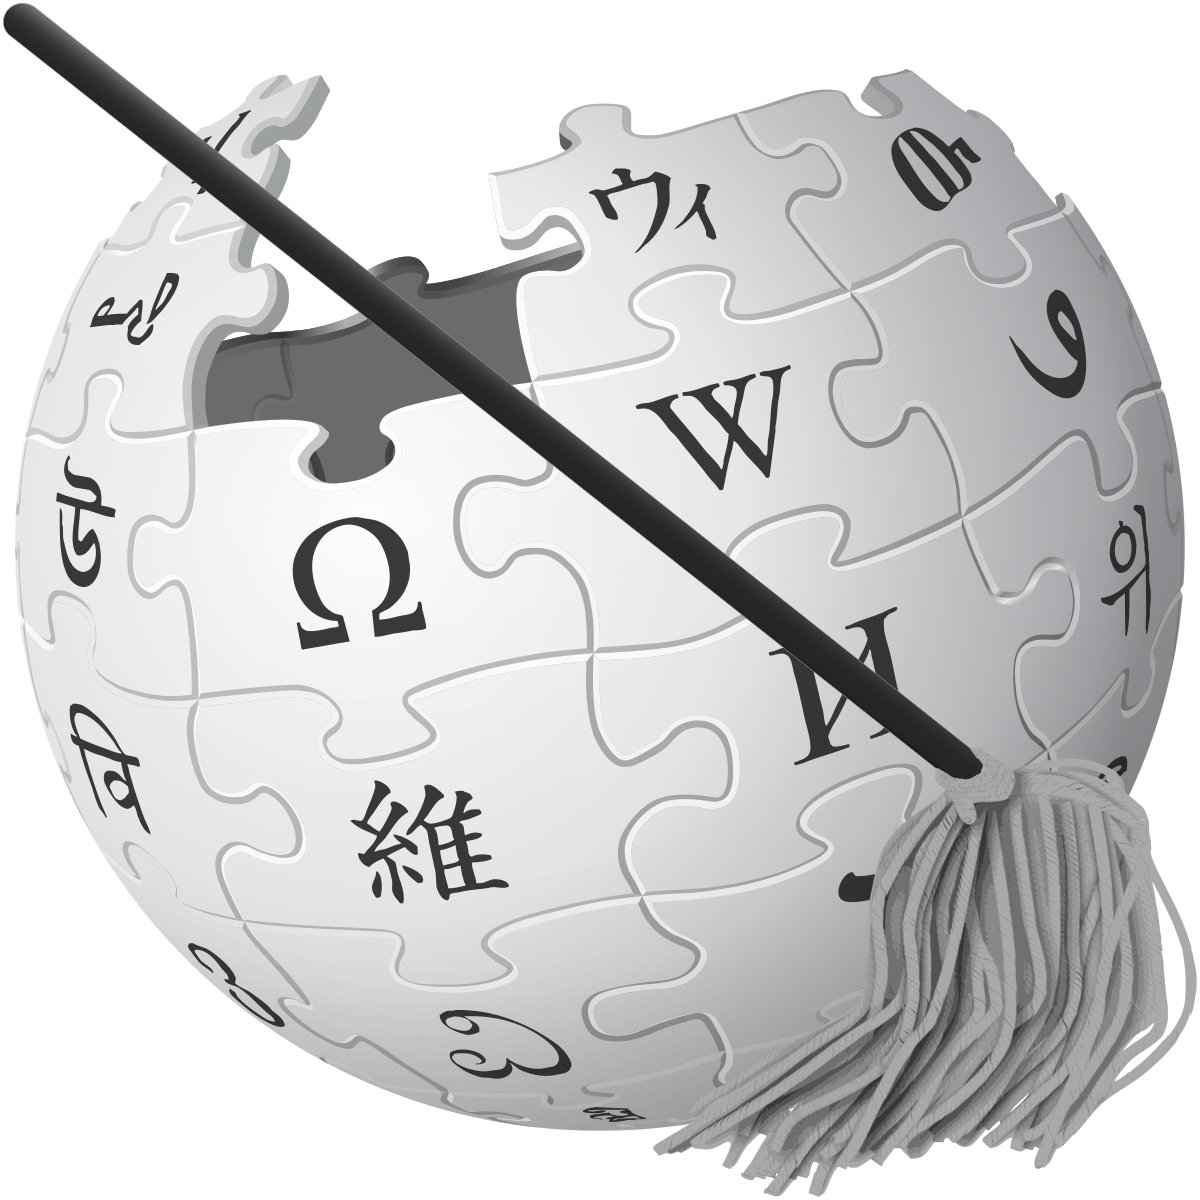 File:Wikipedia logo gold.png